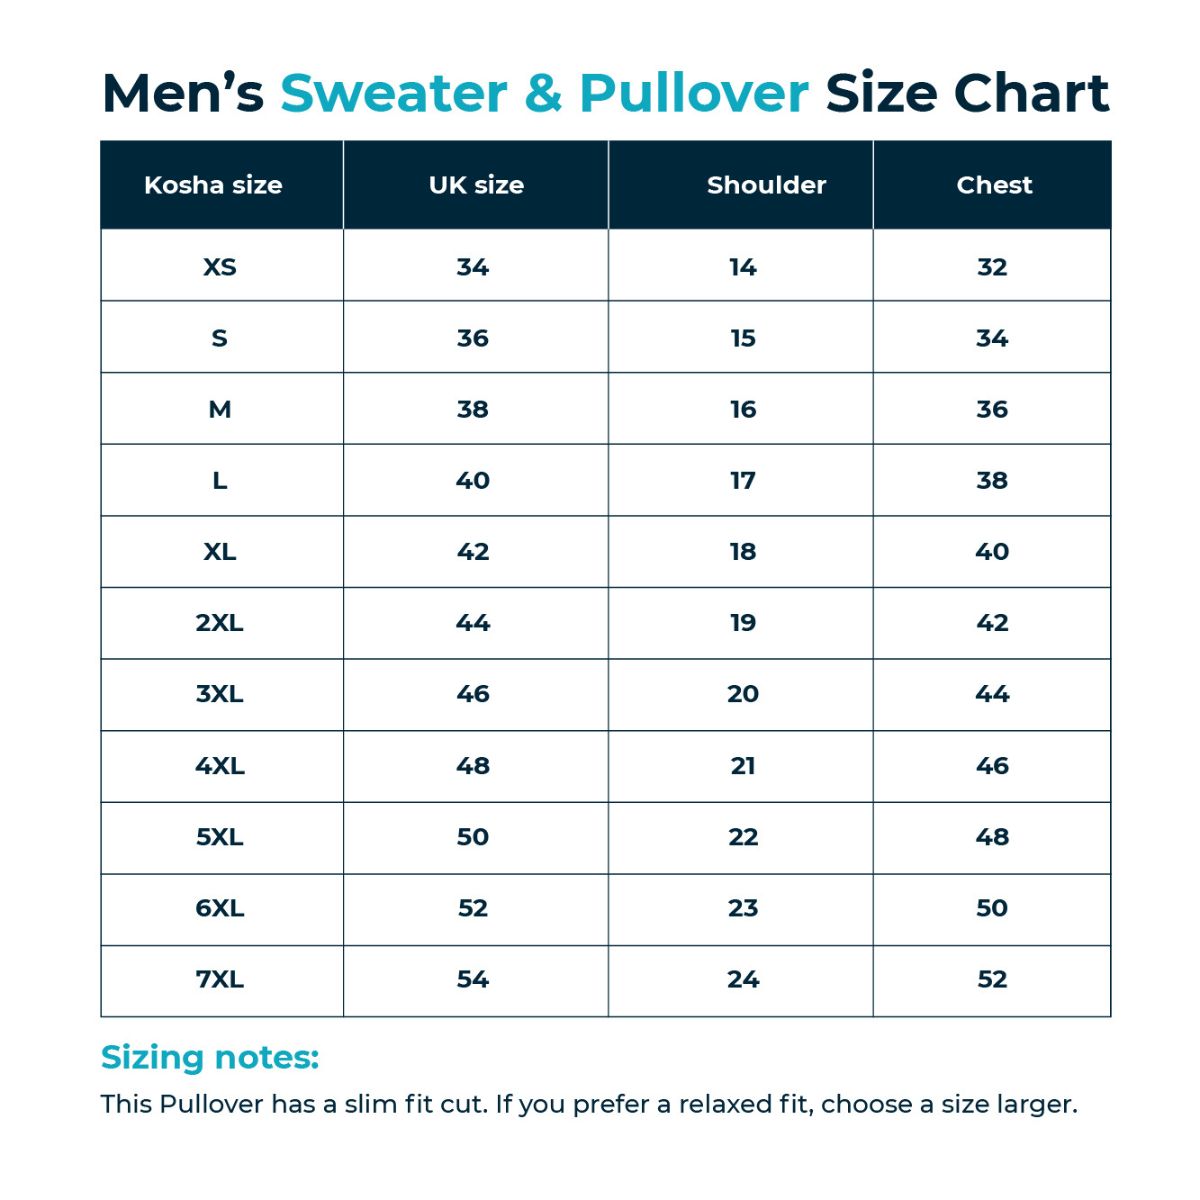 Men's Grey Monte Carlo Merino Wool V-Neck Pullover 